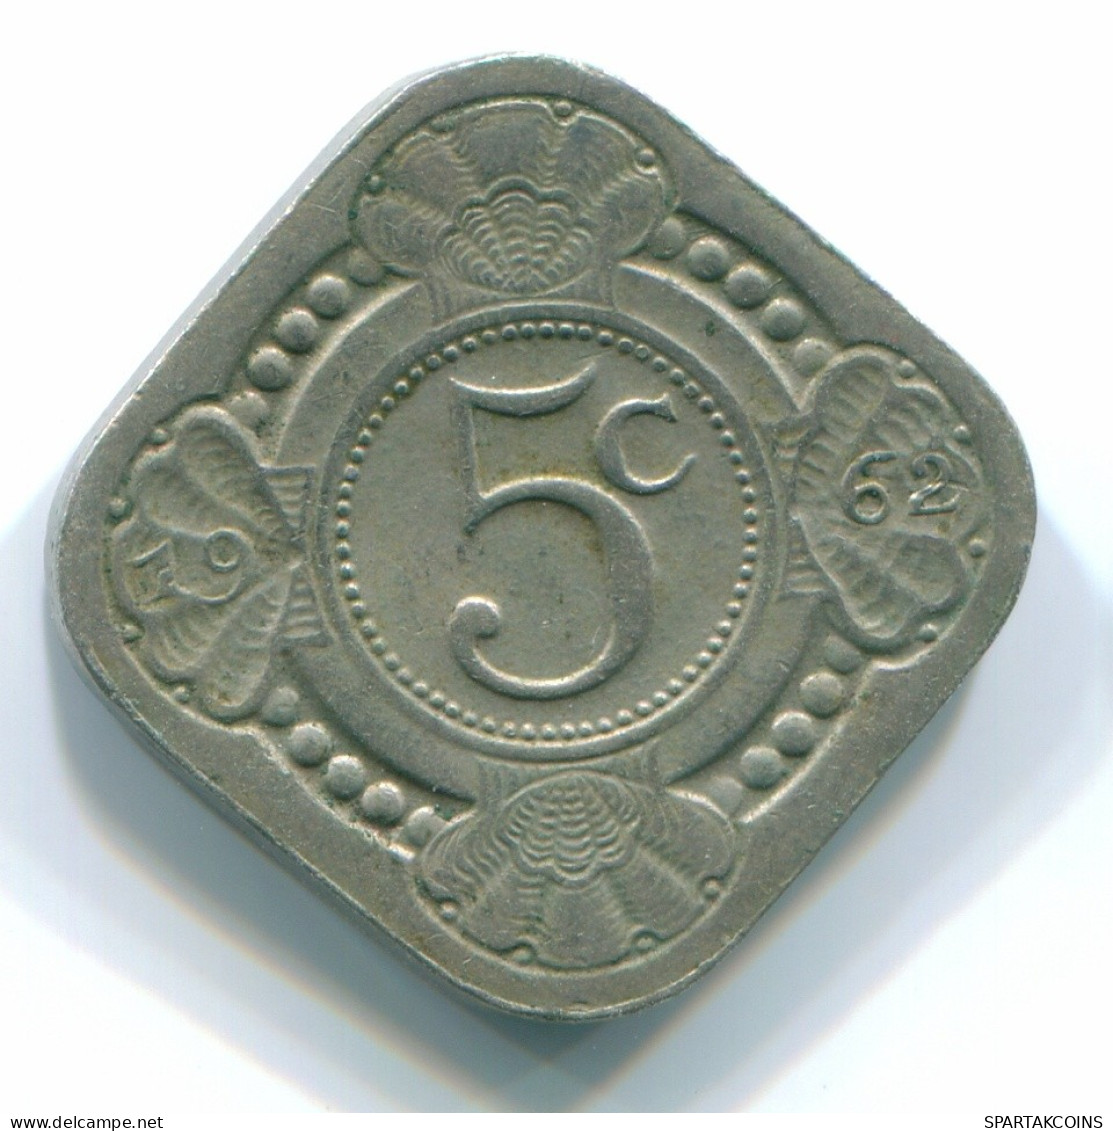 5 CENTS 1962 NETHERLANDS ANTILLES Nickel Colonial Coin #S12413.U.A - Antilles Néerlandaises